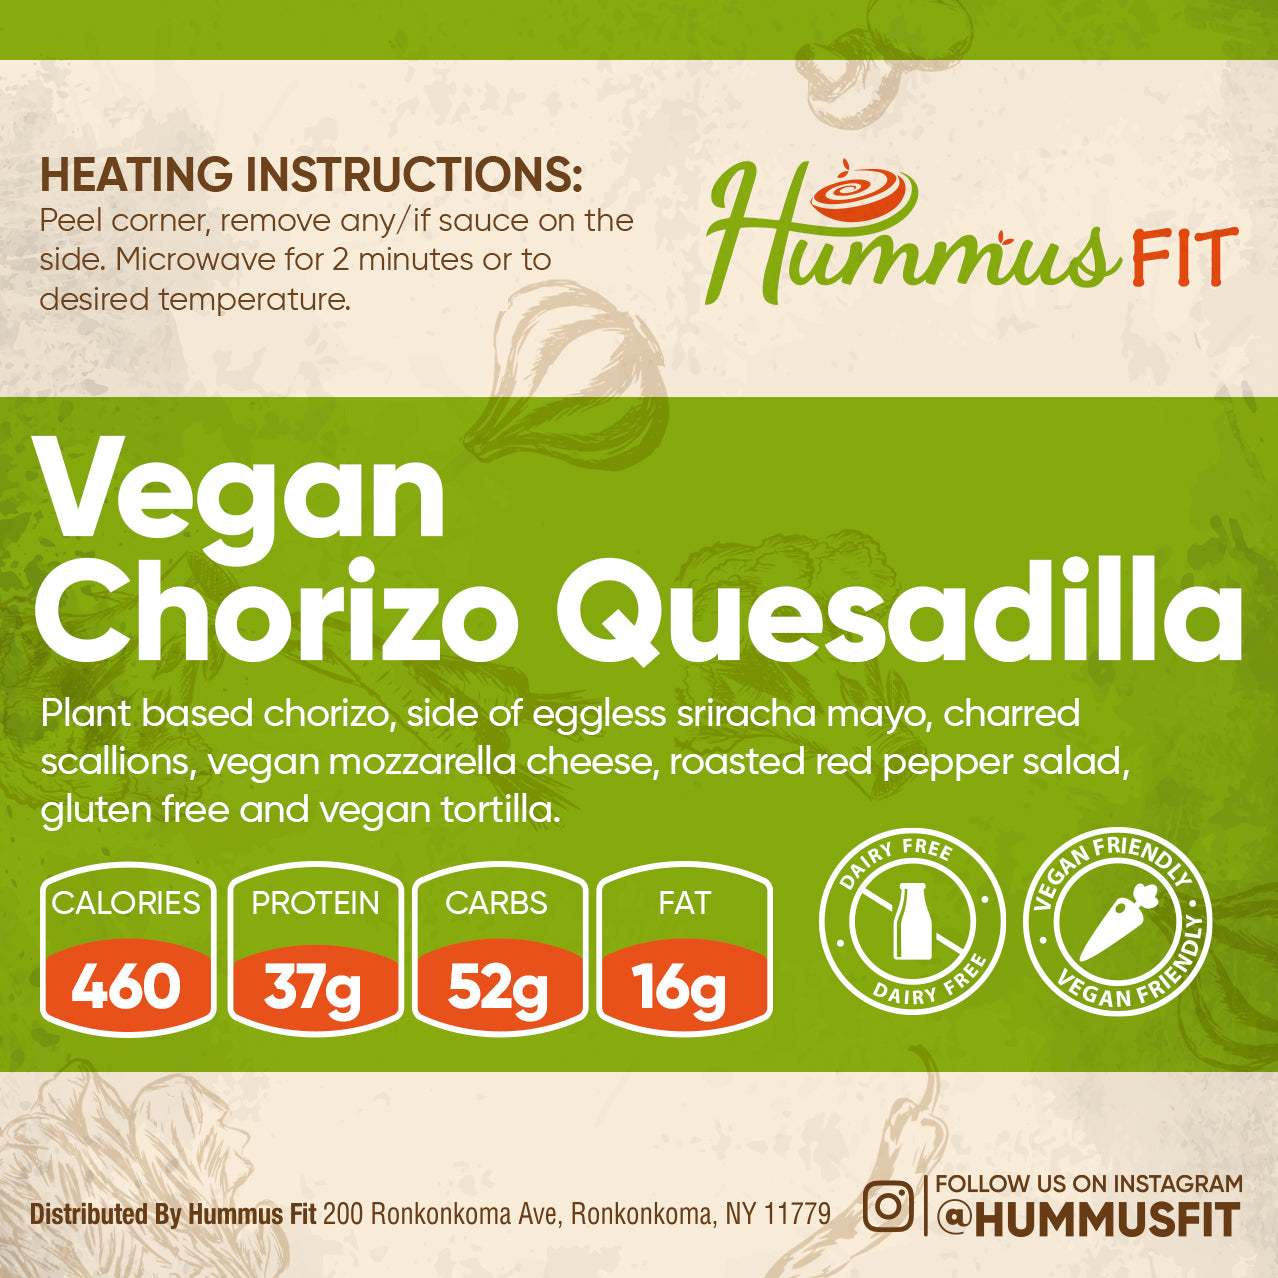 vegan chorizo quesadilla prepared meals delivered